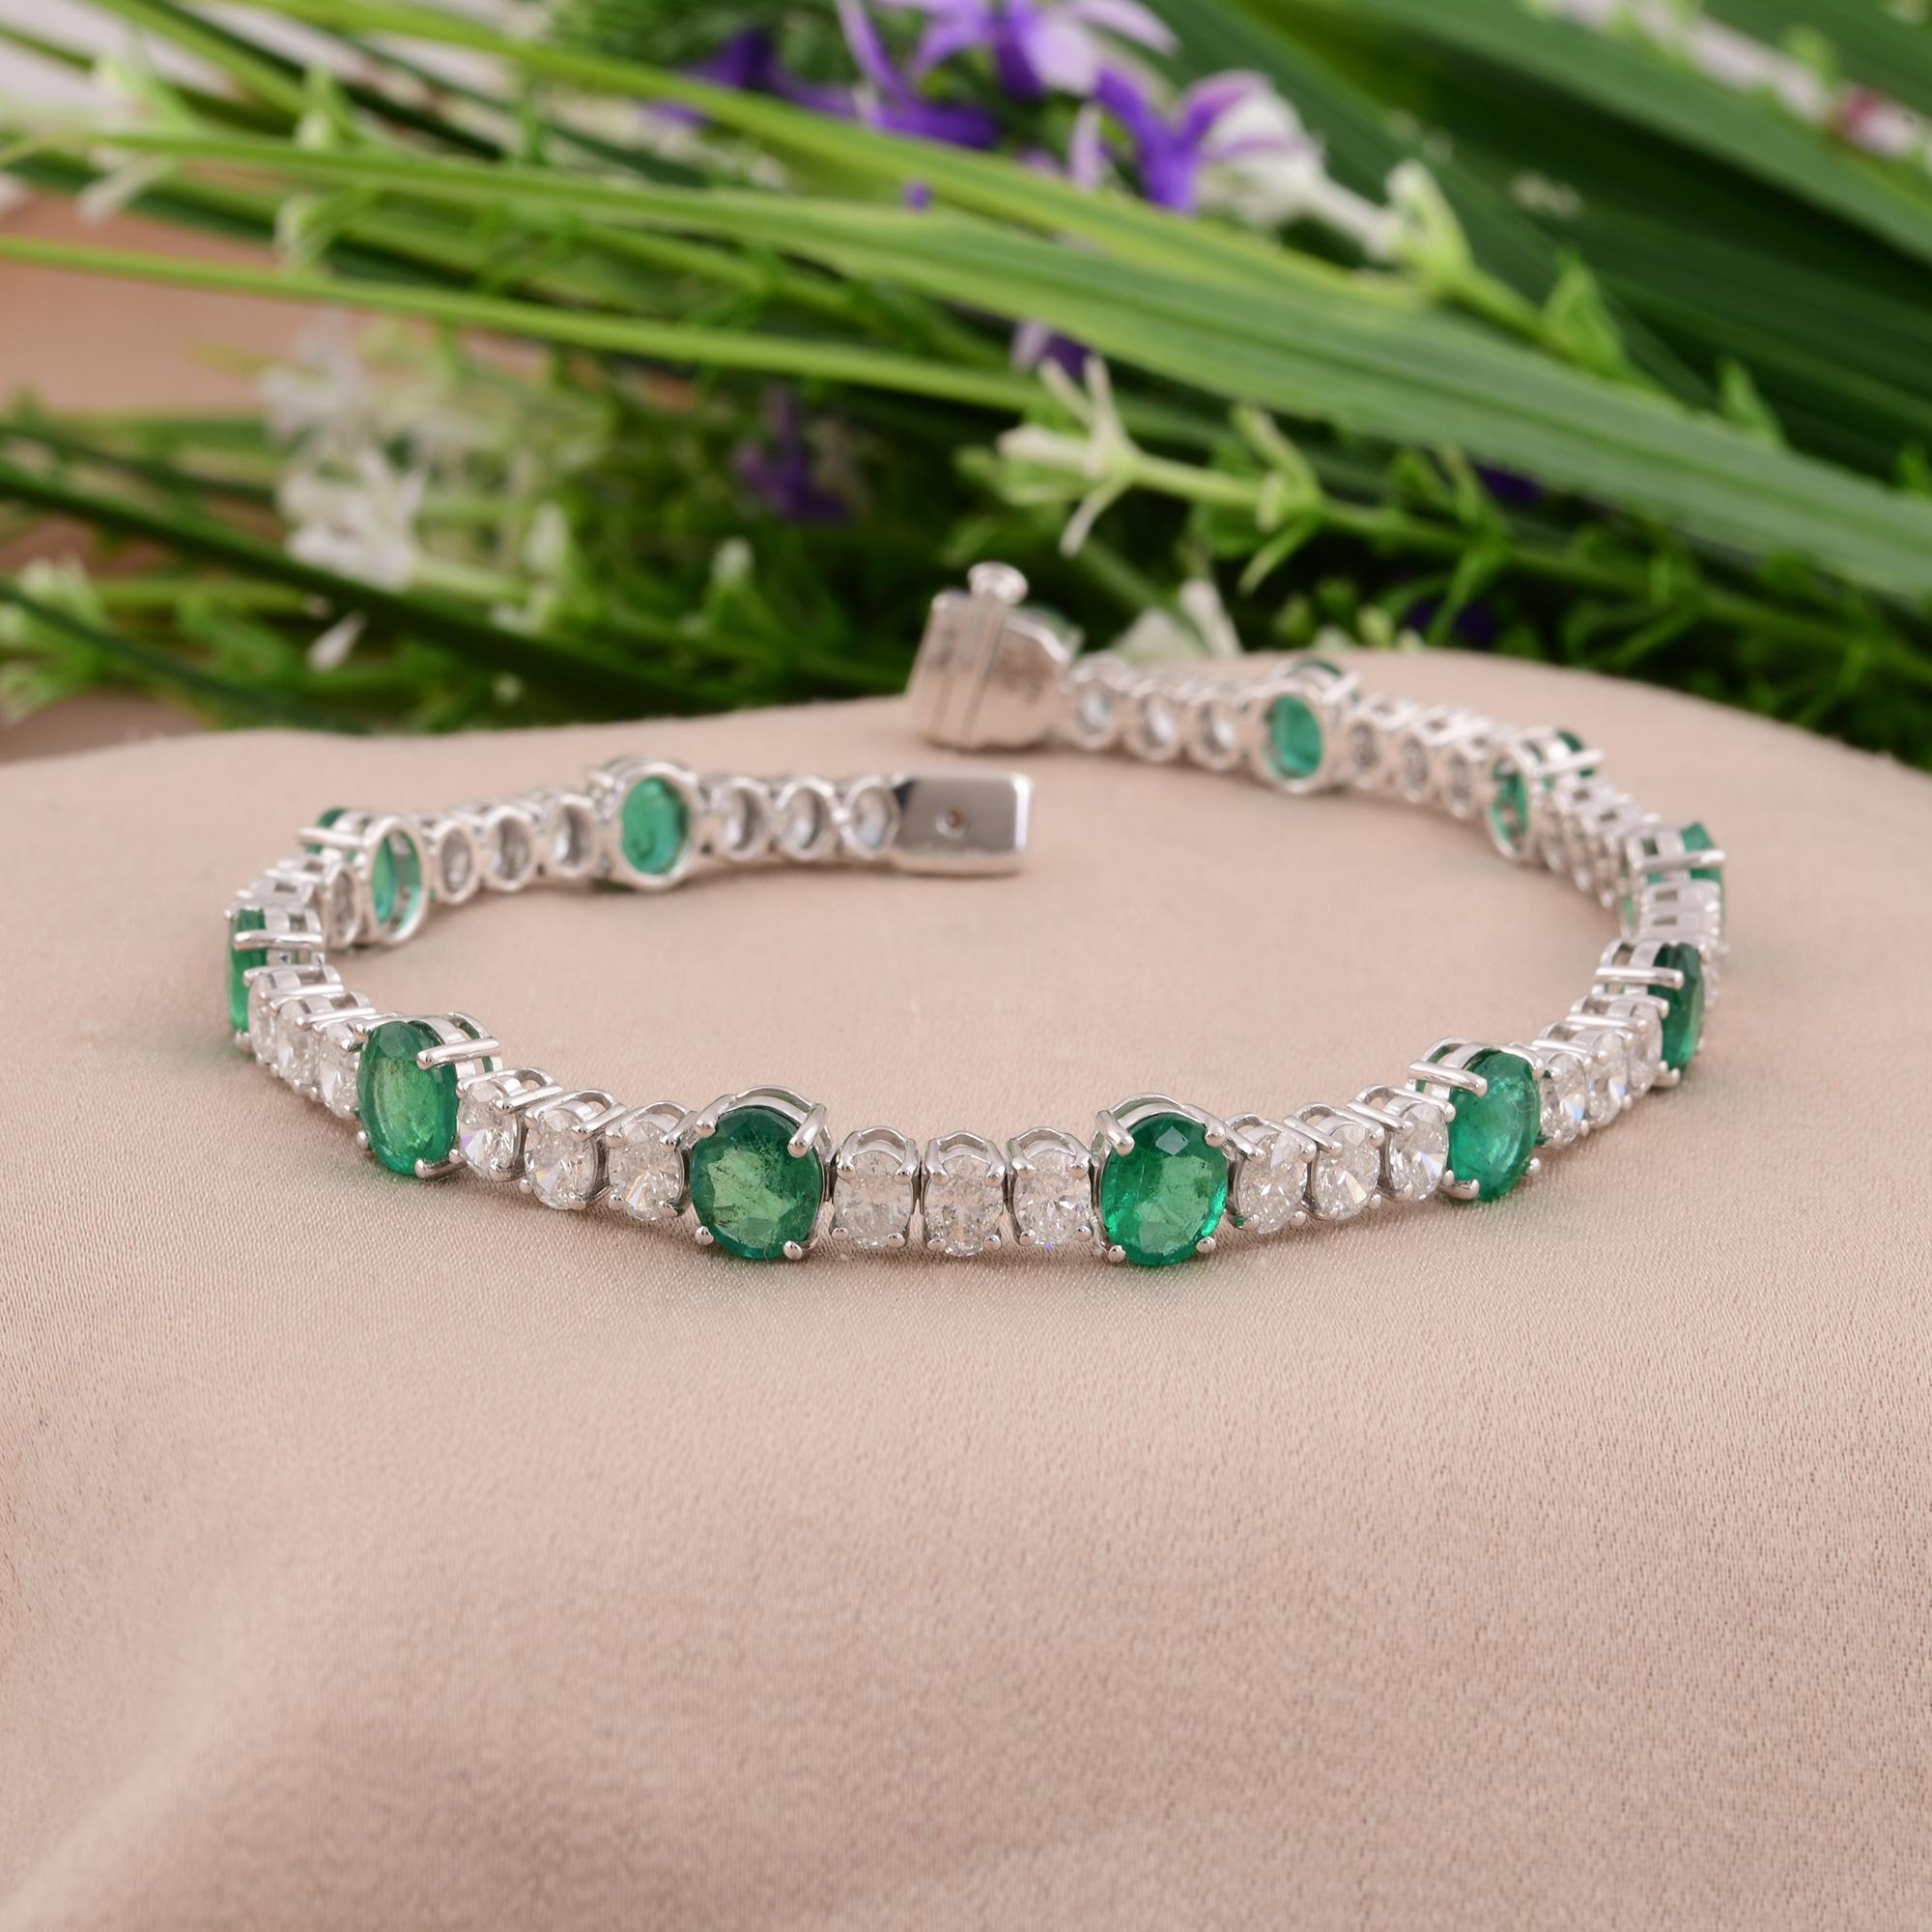 Oval Cut Oval Shape Zambian Emerald Diamond Bracelet 18 Karat White Gold Handmade Jewelry For Sale